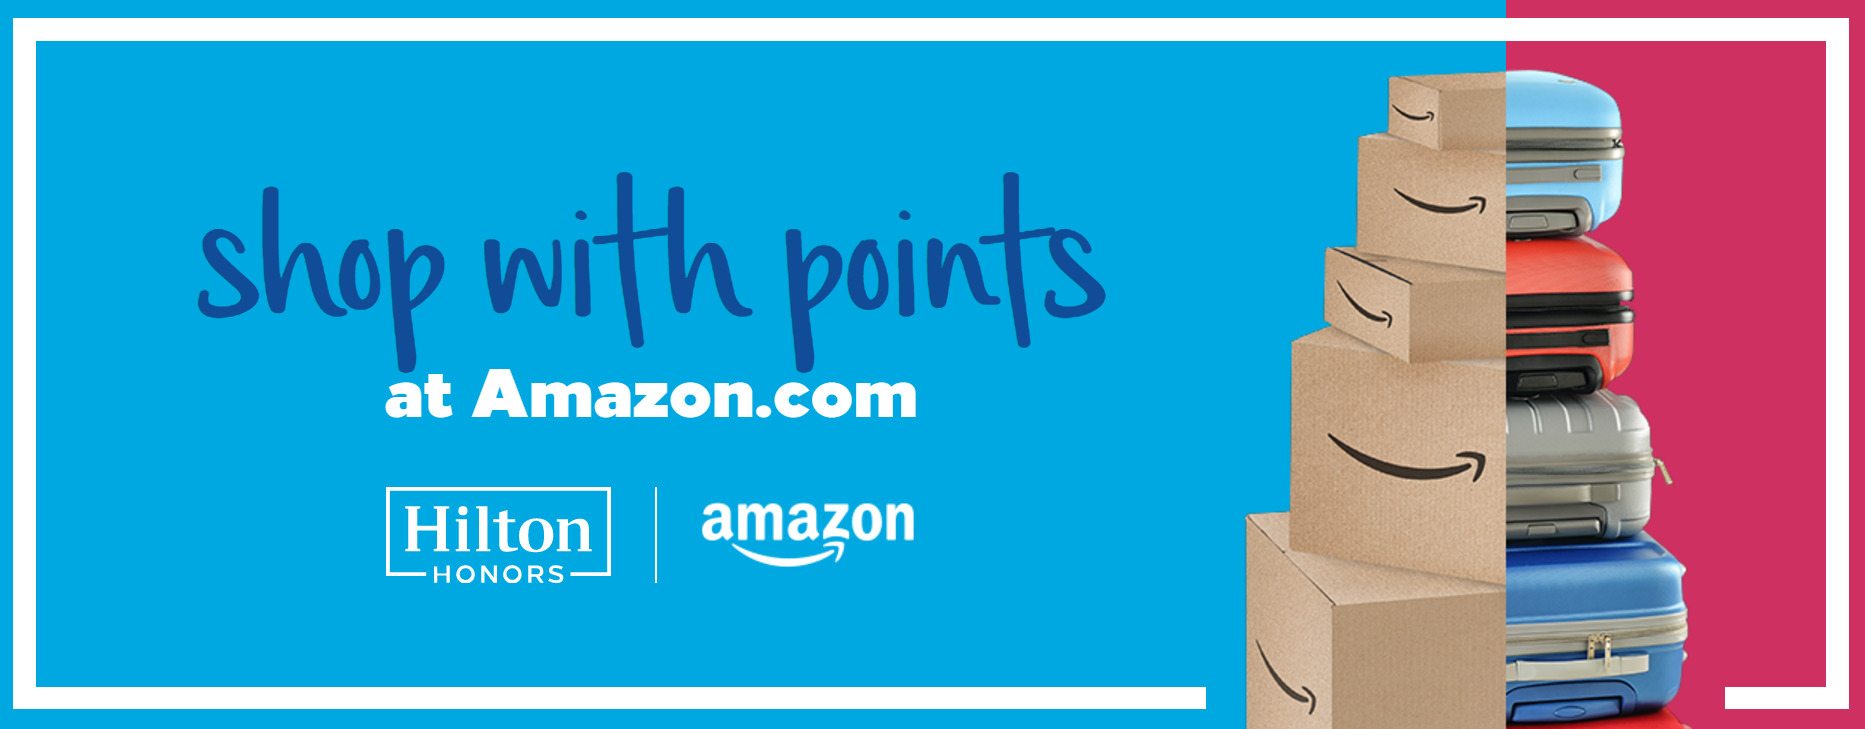 Use Hilton Points to Buy Stuff from Amazon - InsideFlyer